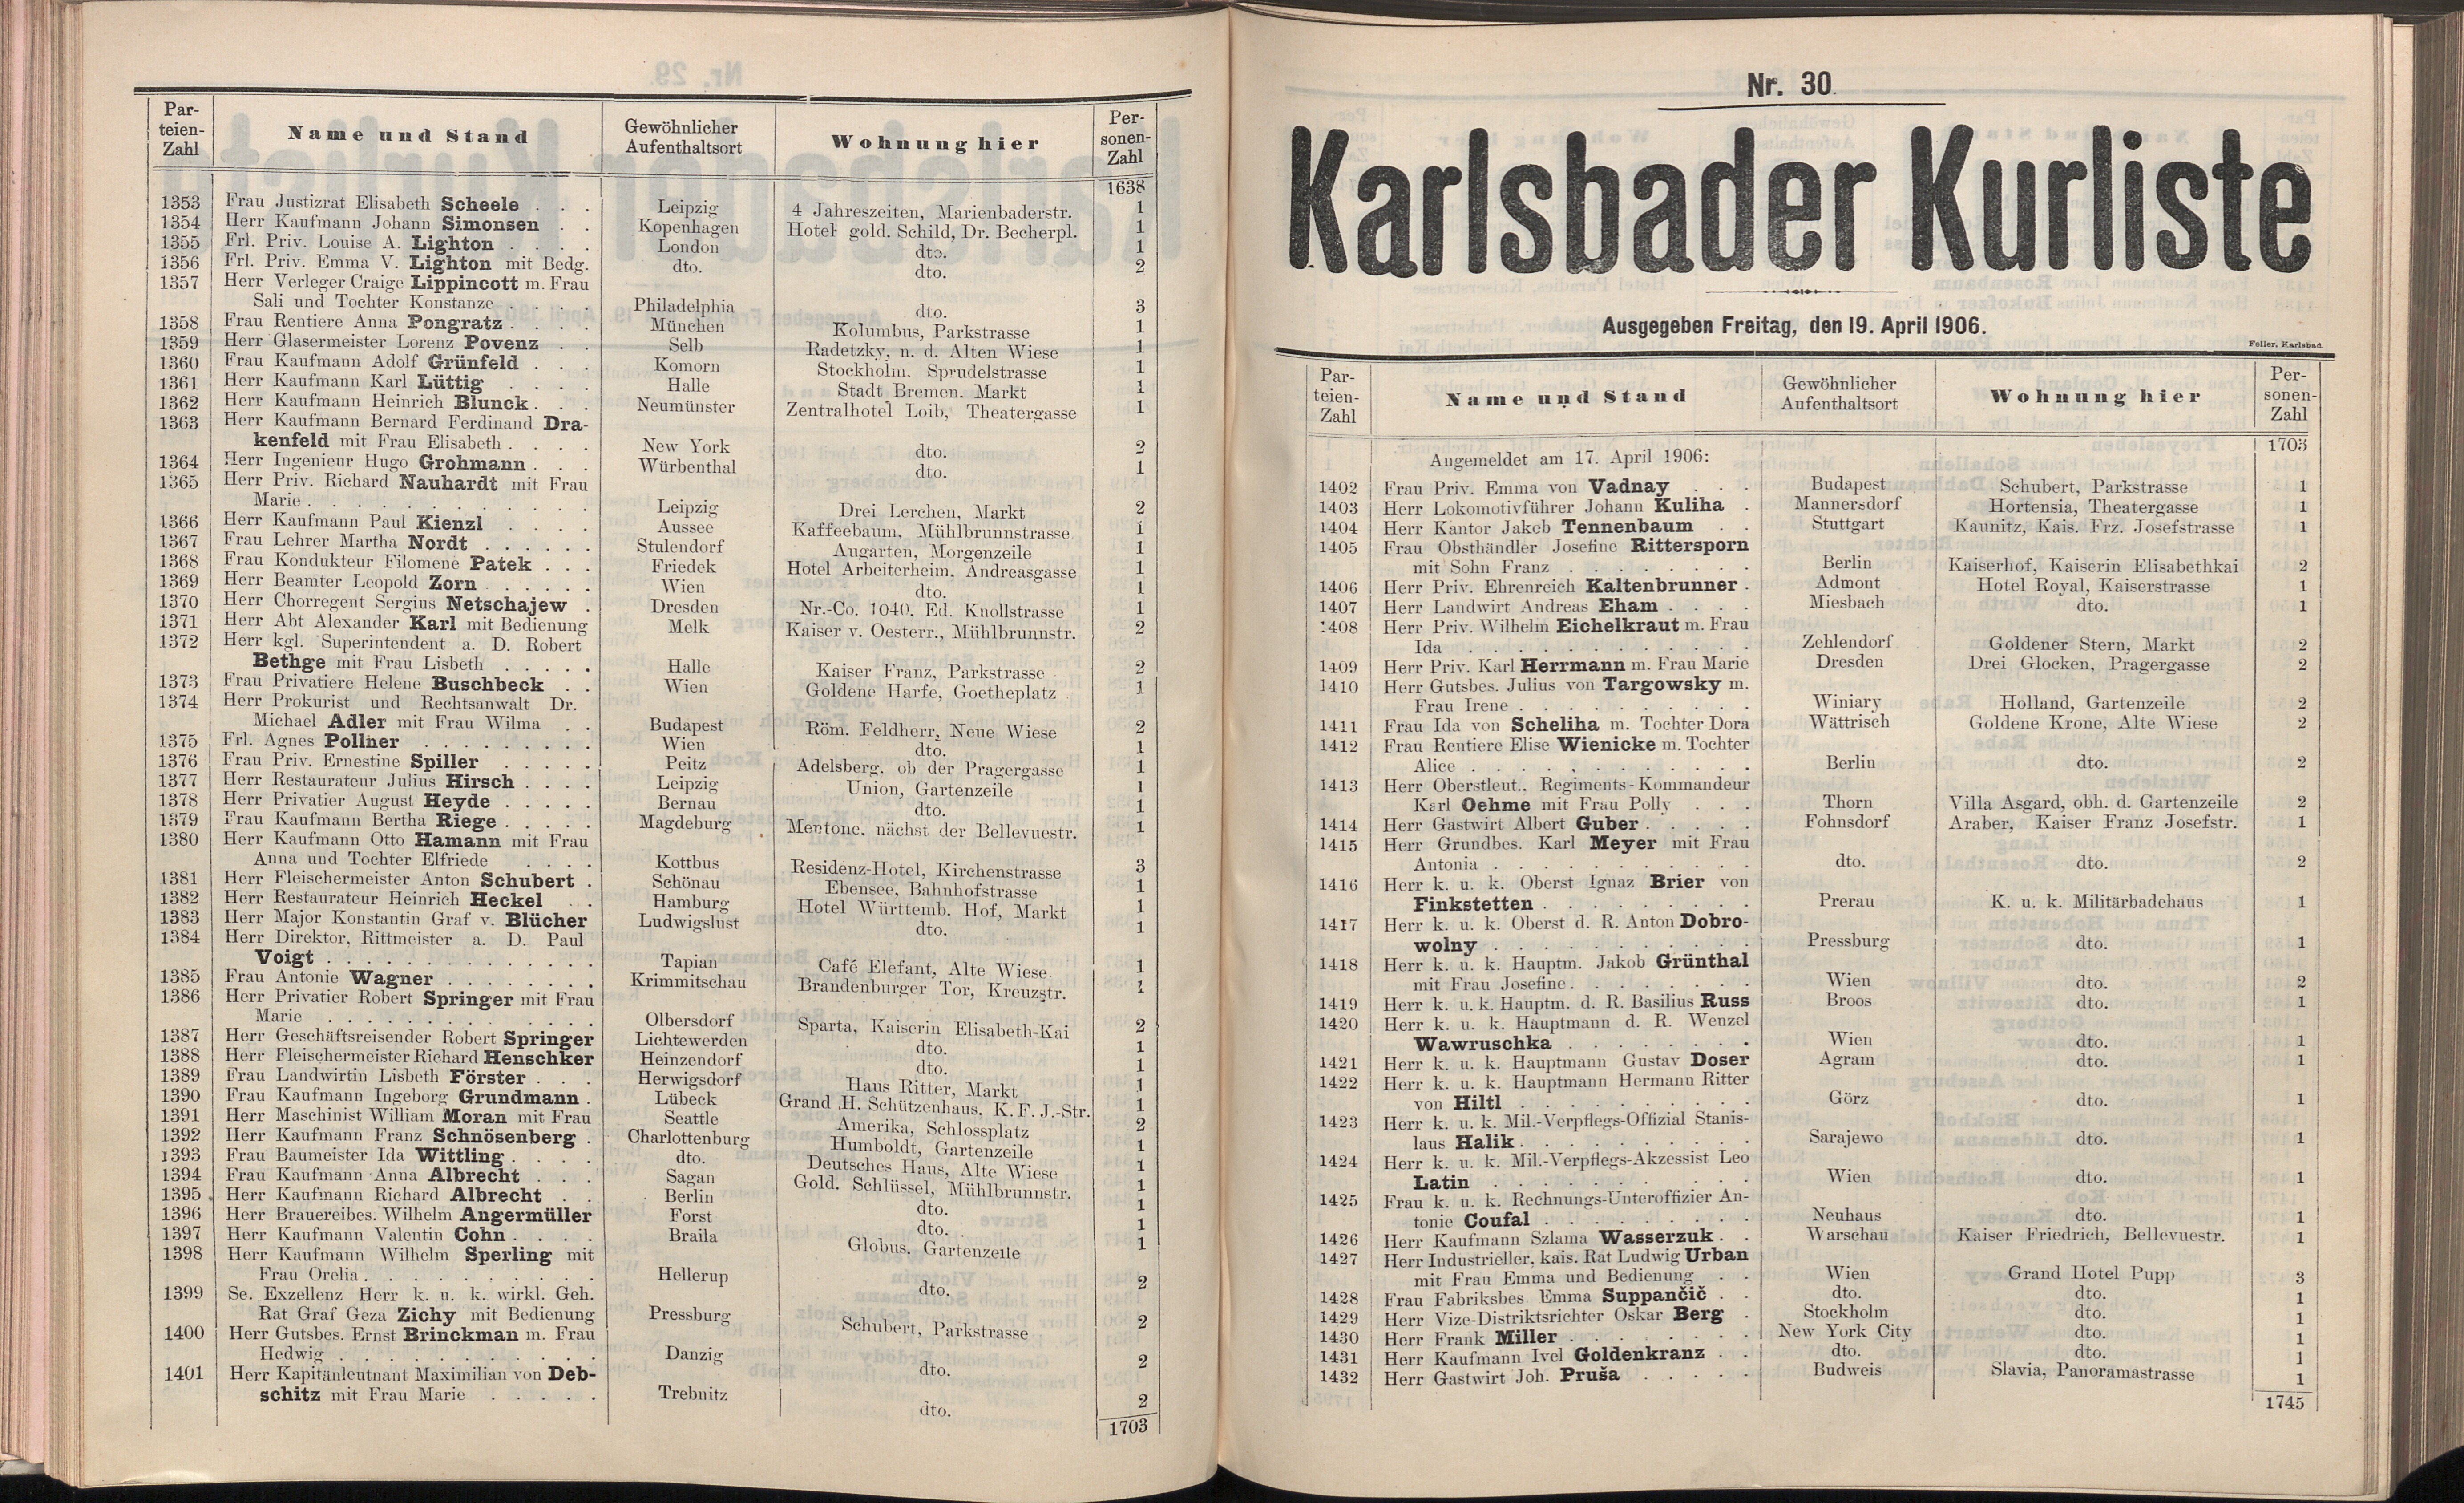 143. soap-kv_knihovna_karlsbader-kurliste-1907_1440